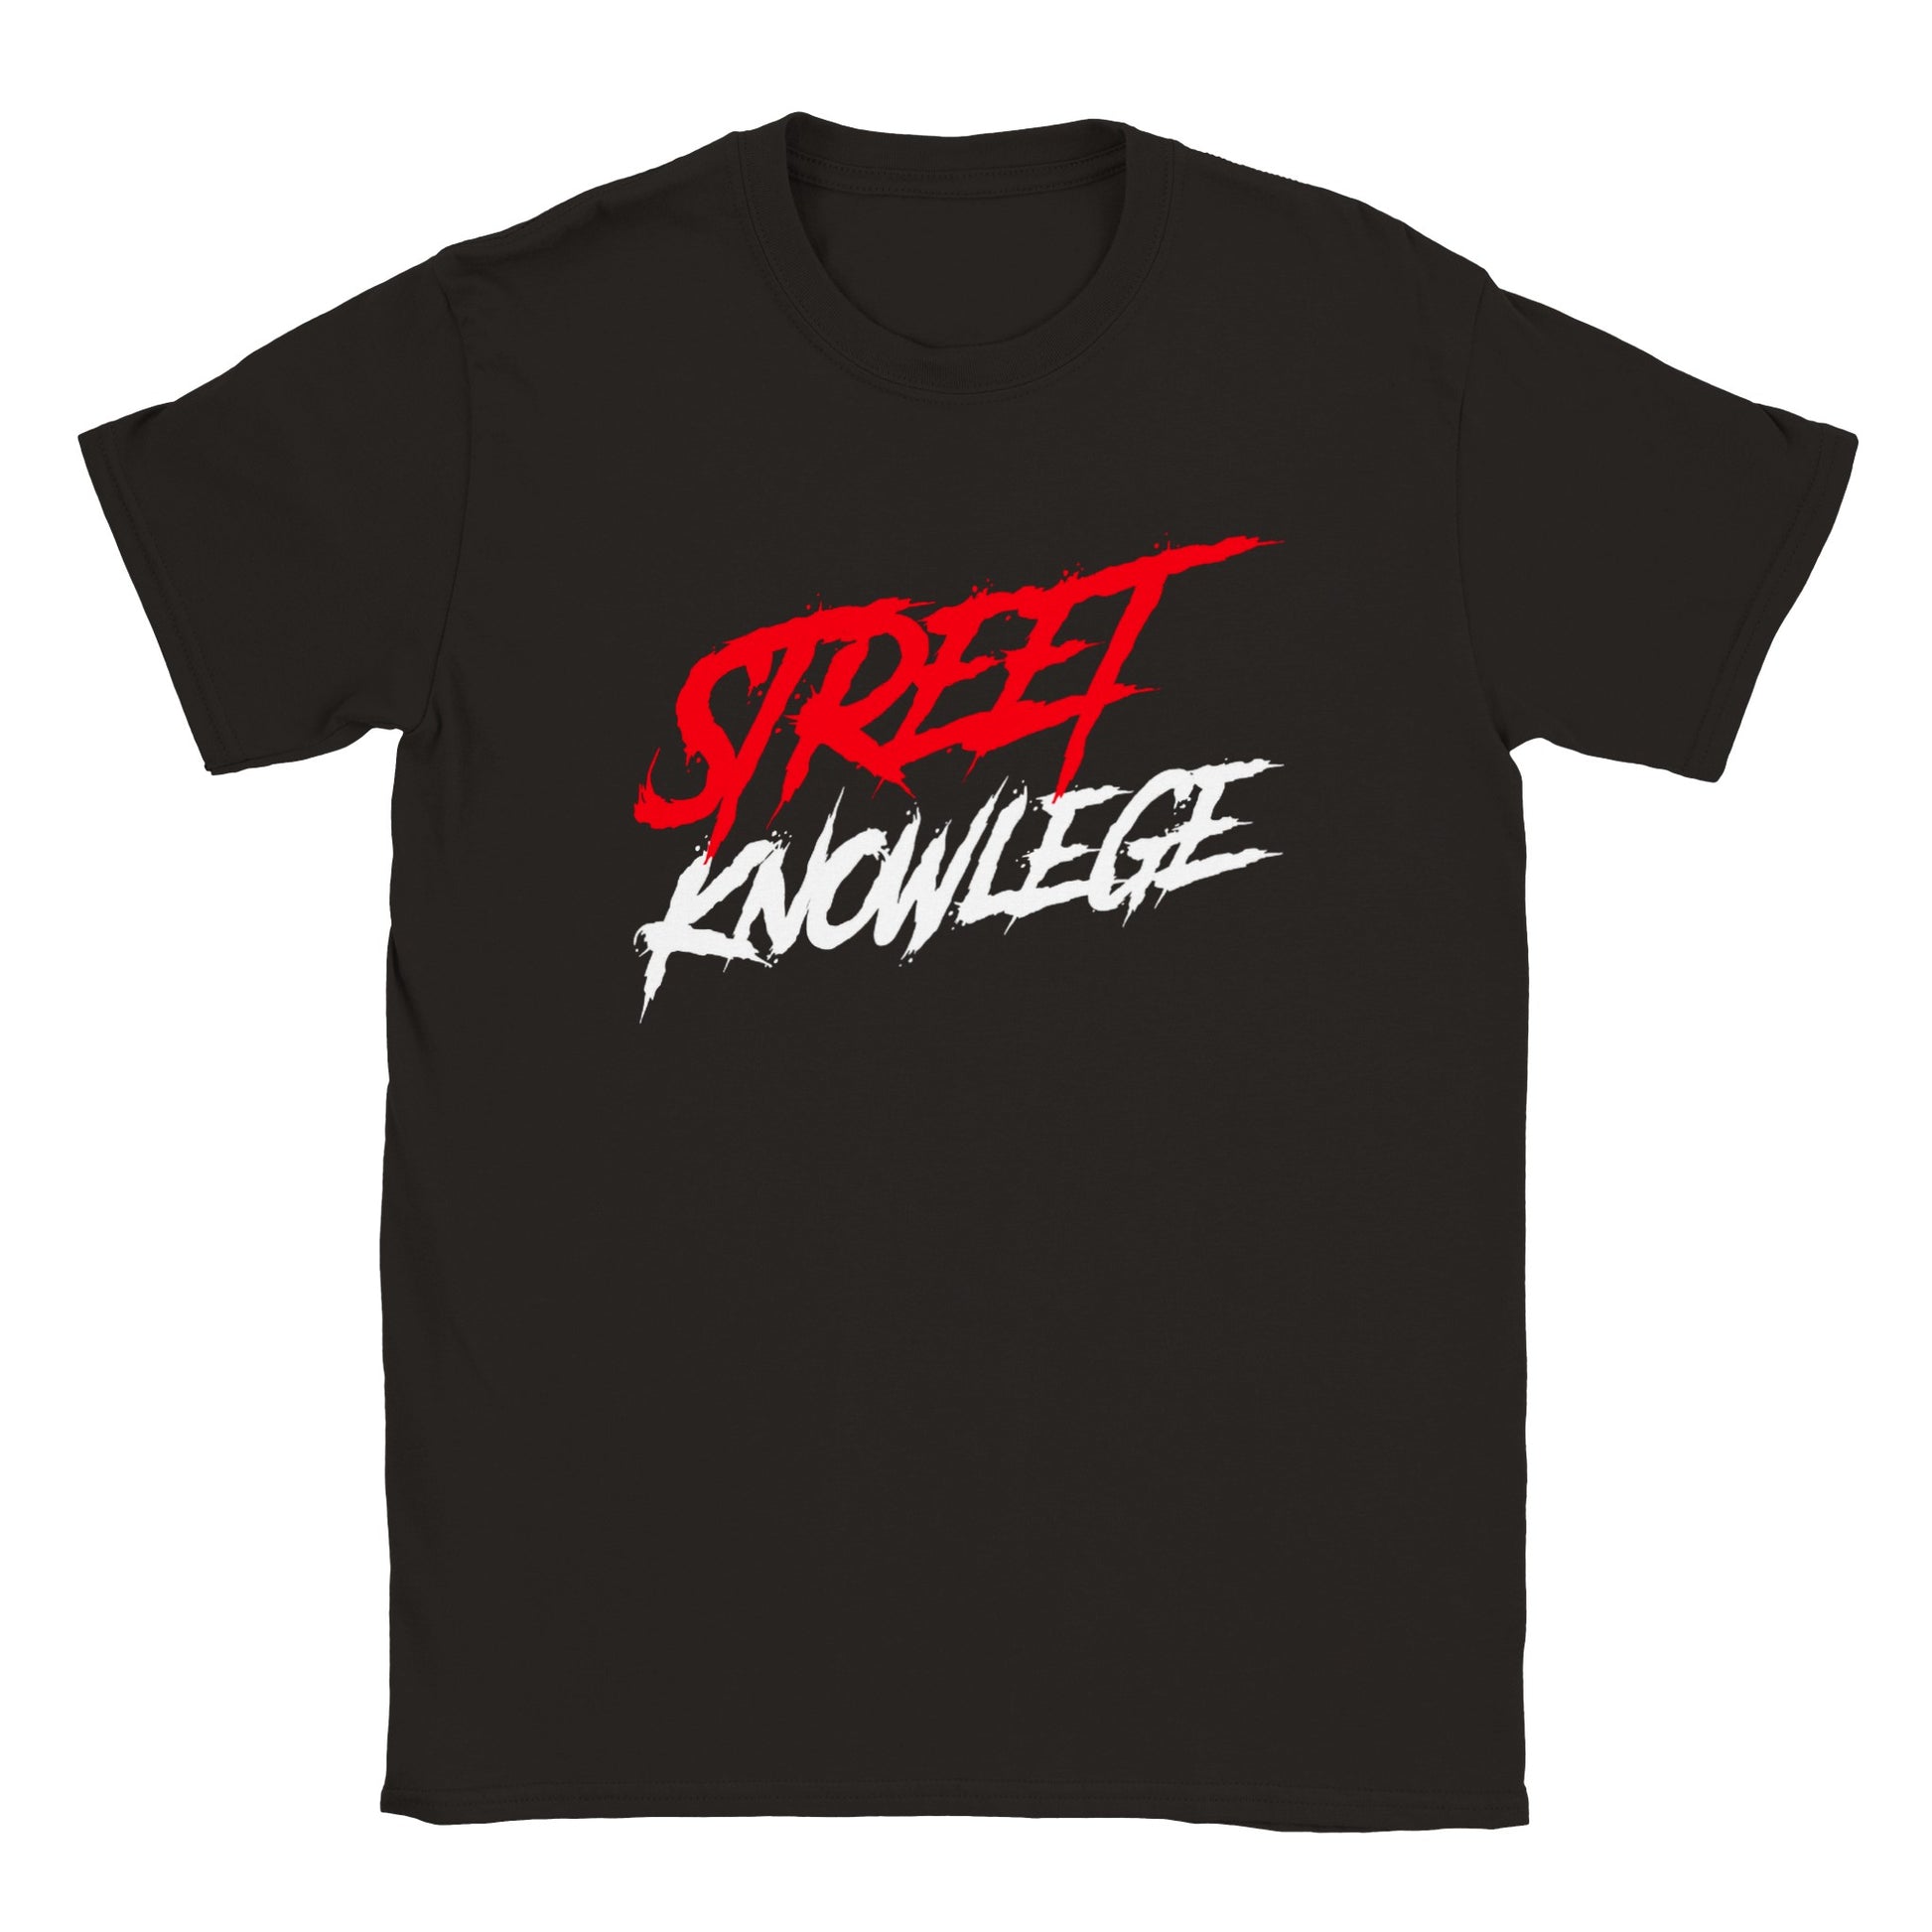 Streetwear clothing  t-shirt dress hood street